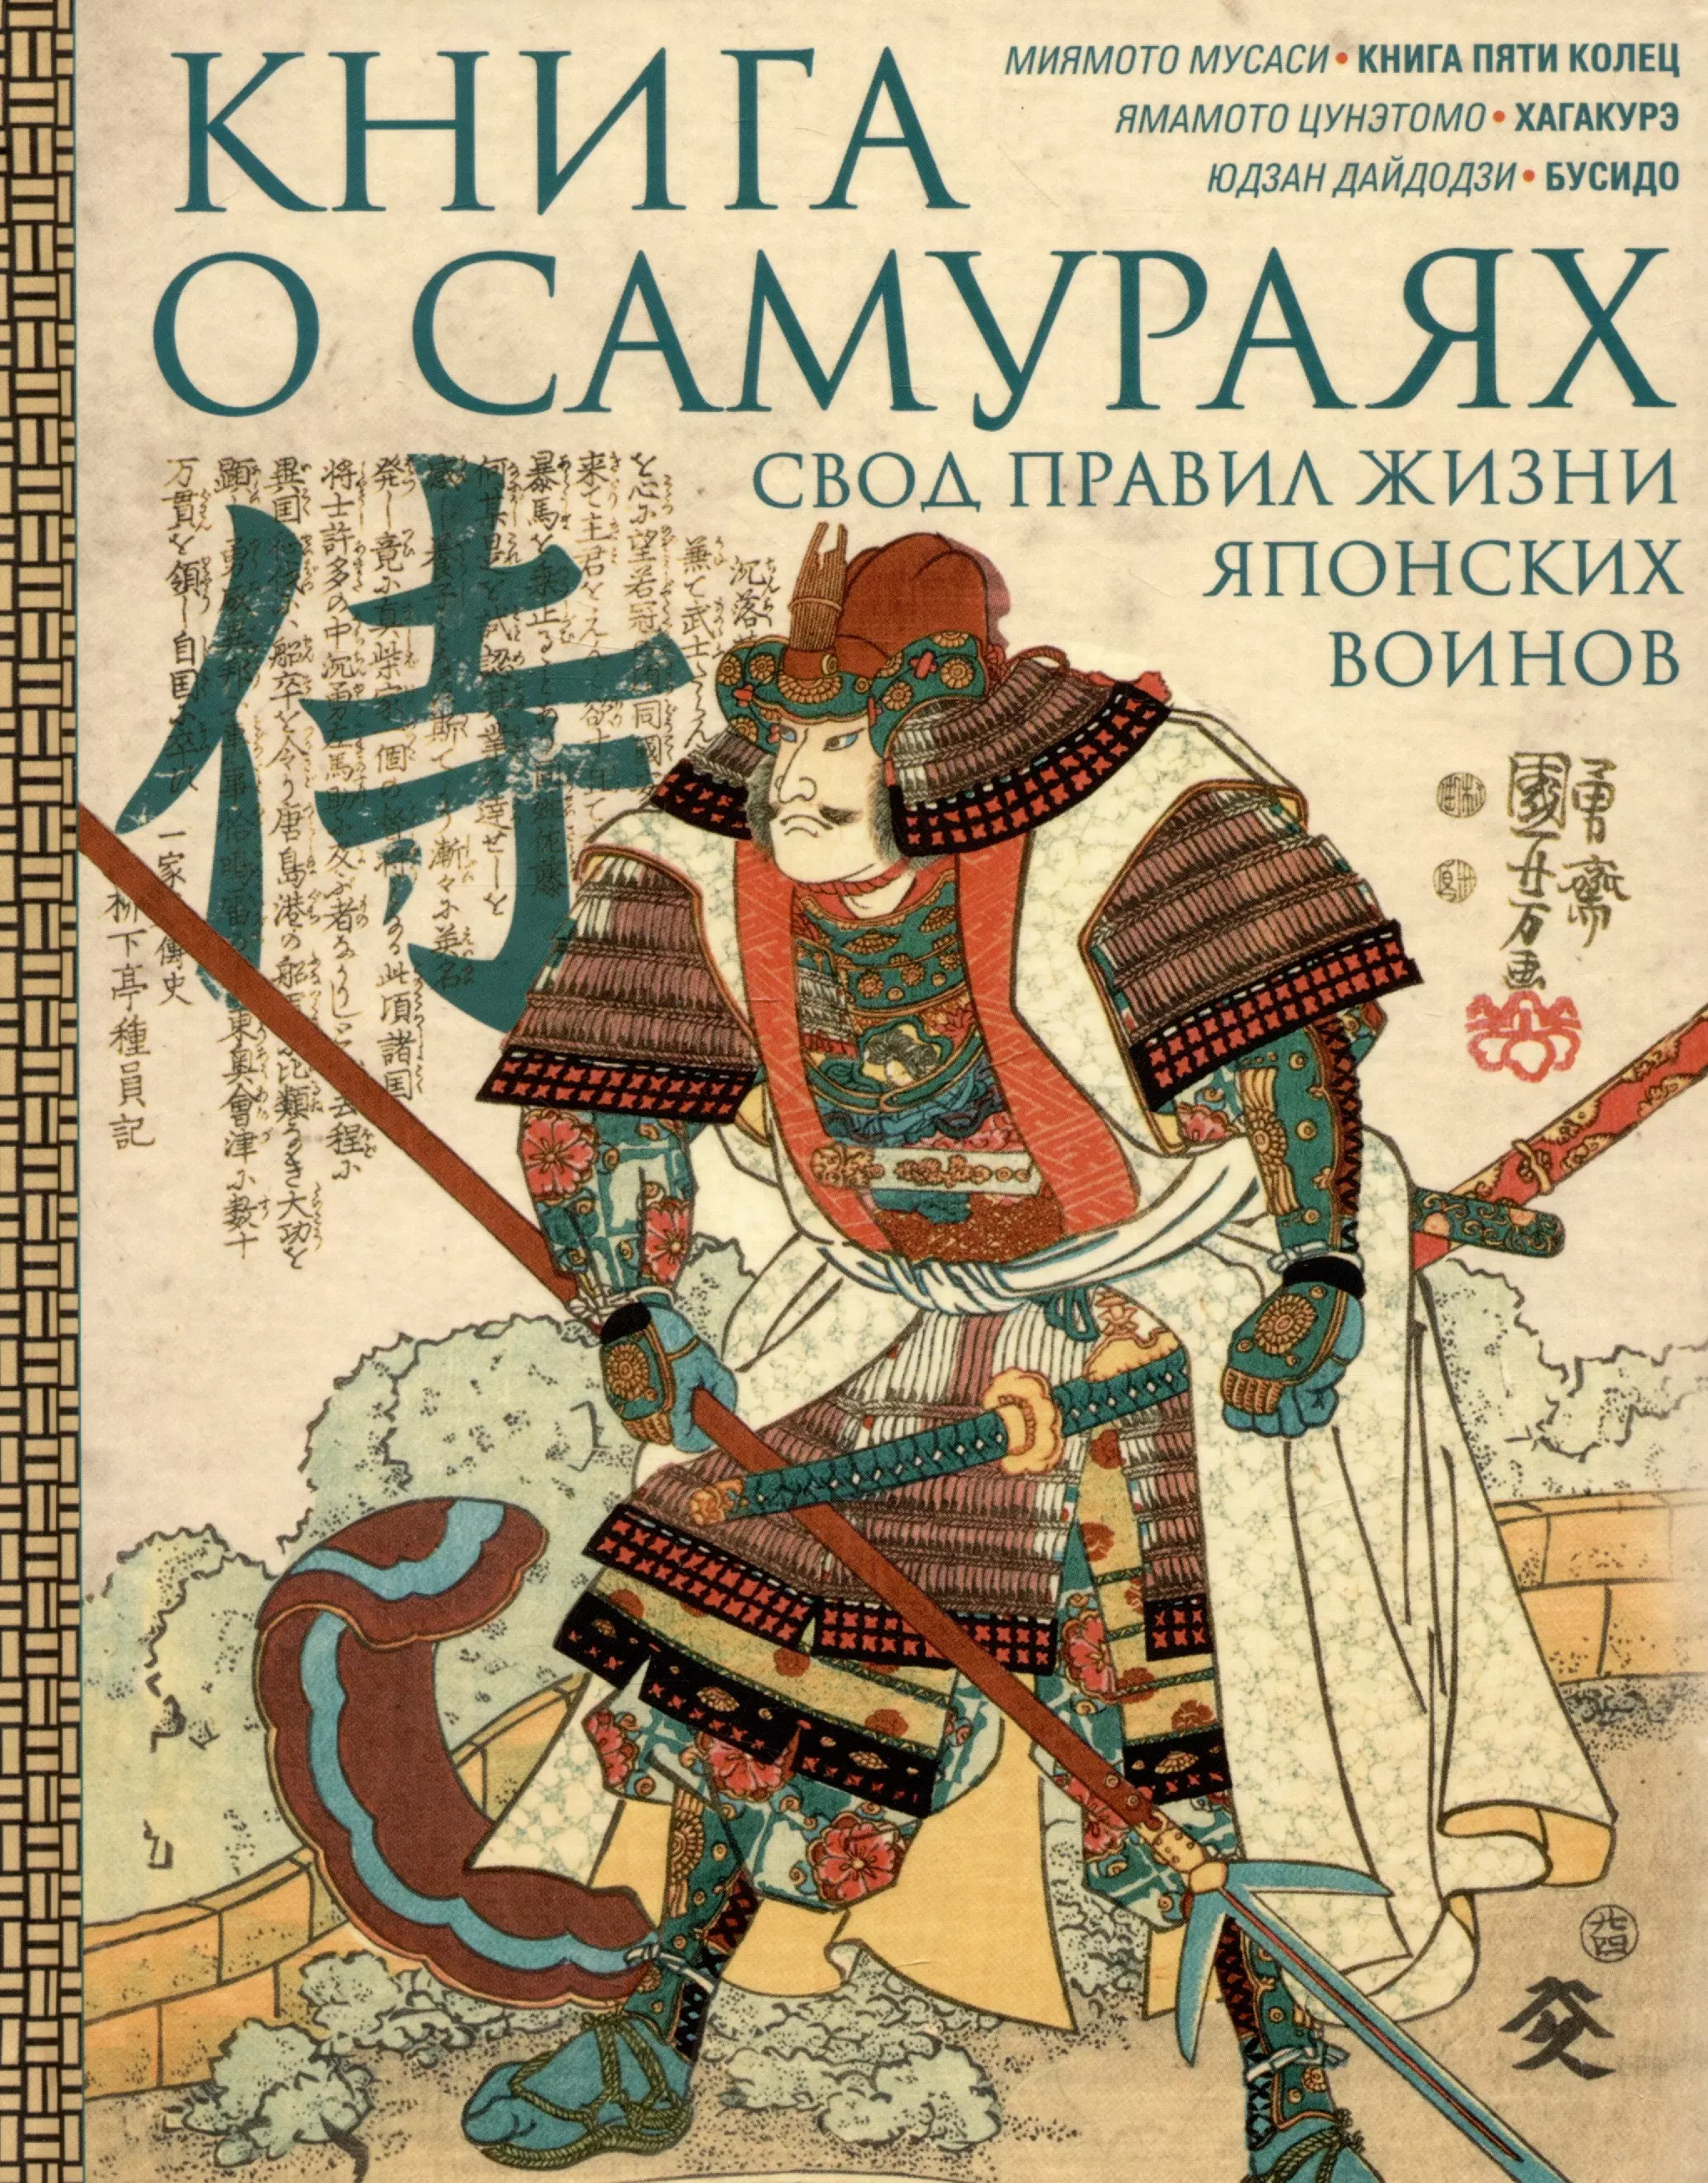 Миямото Мусаси, Дайдодзи Юдзан, Цунэтомо Ямамото Книга о самураях. Свод правил жизни японских воинов